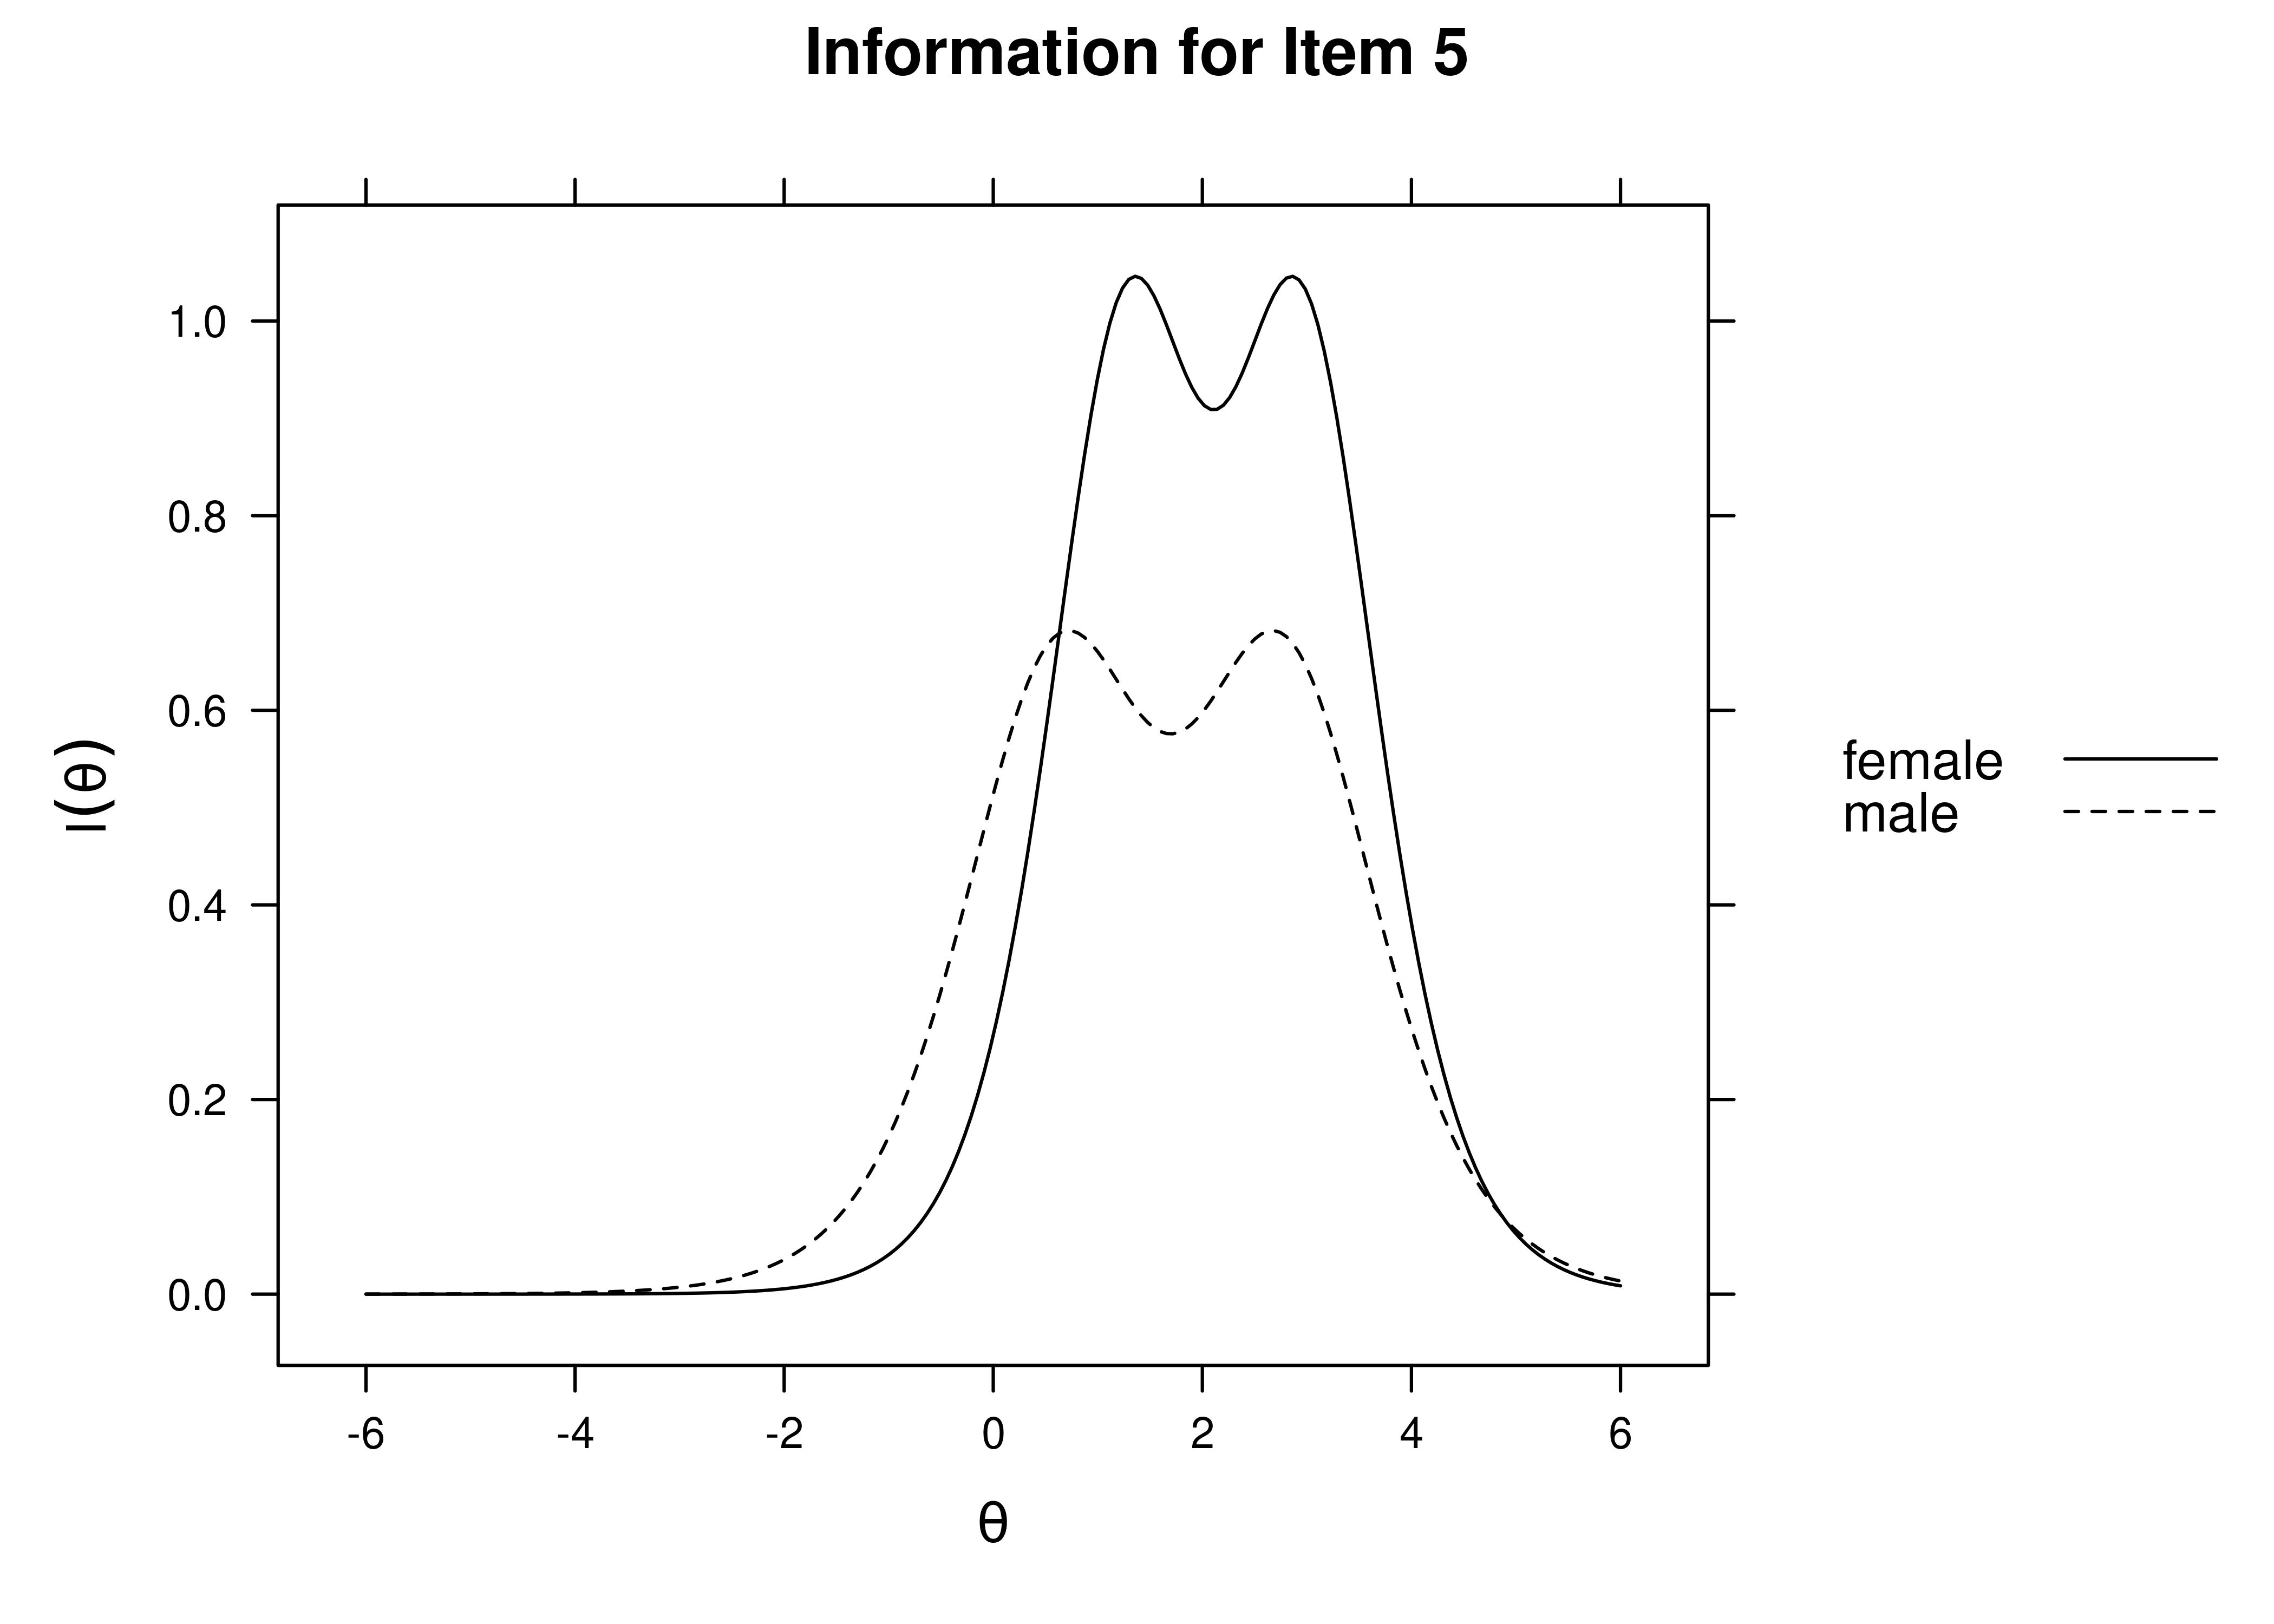 Item Information Curves by Sex: Item 5.